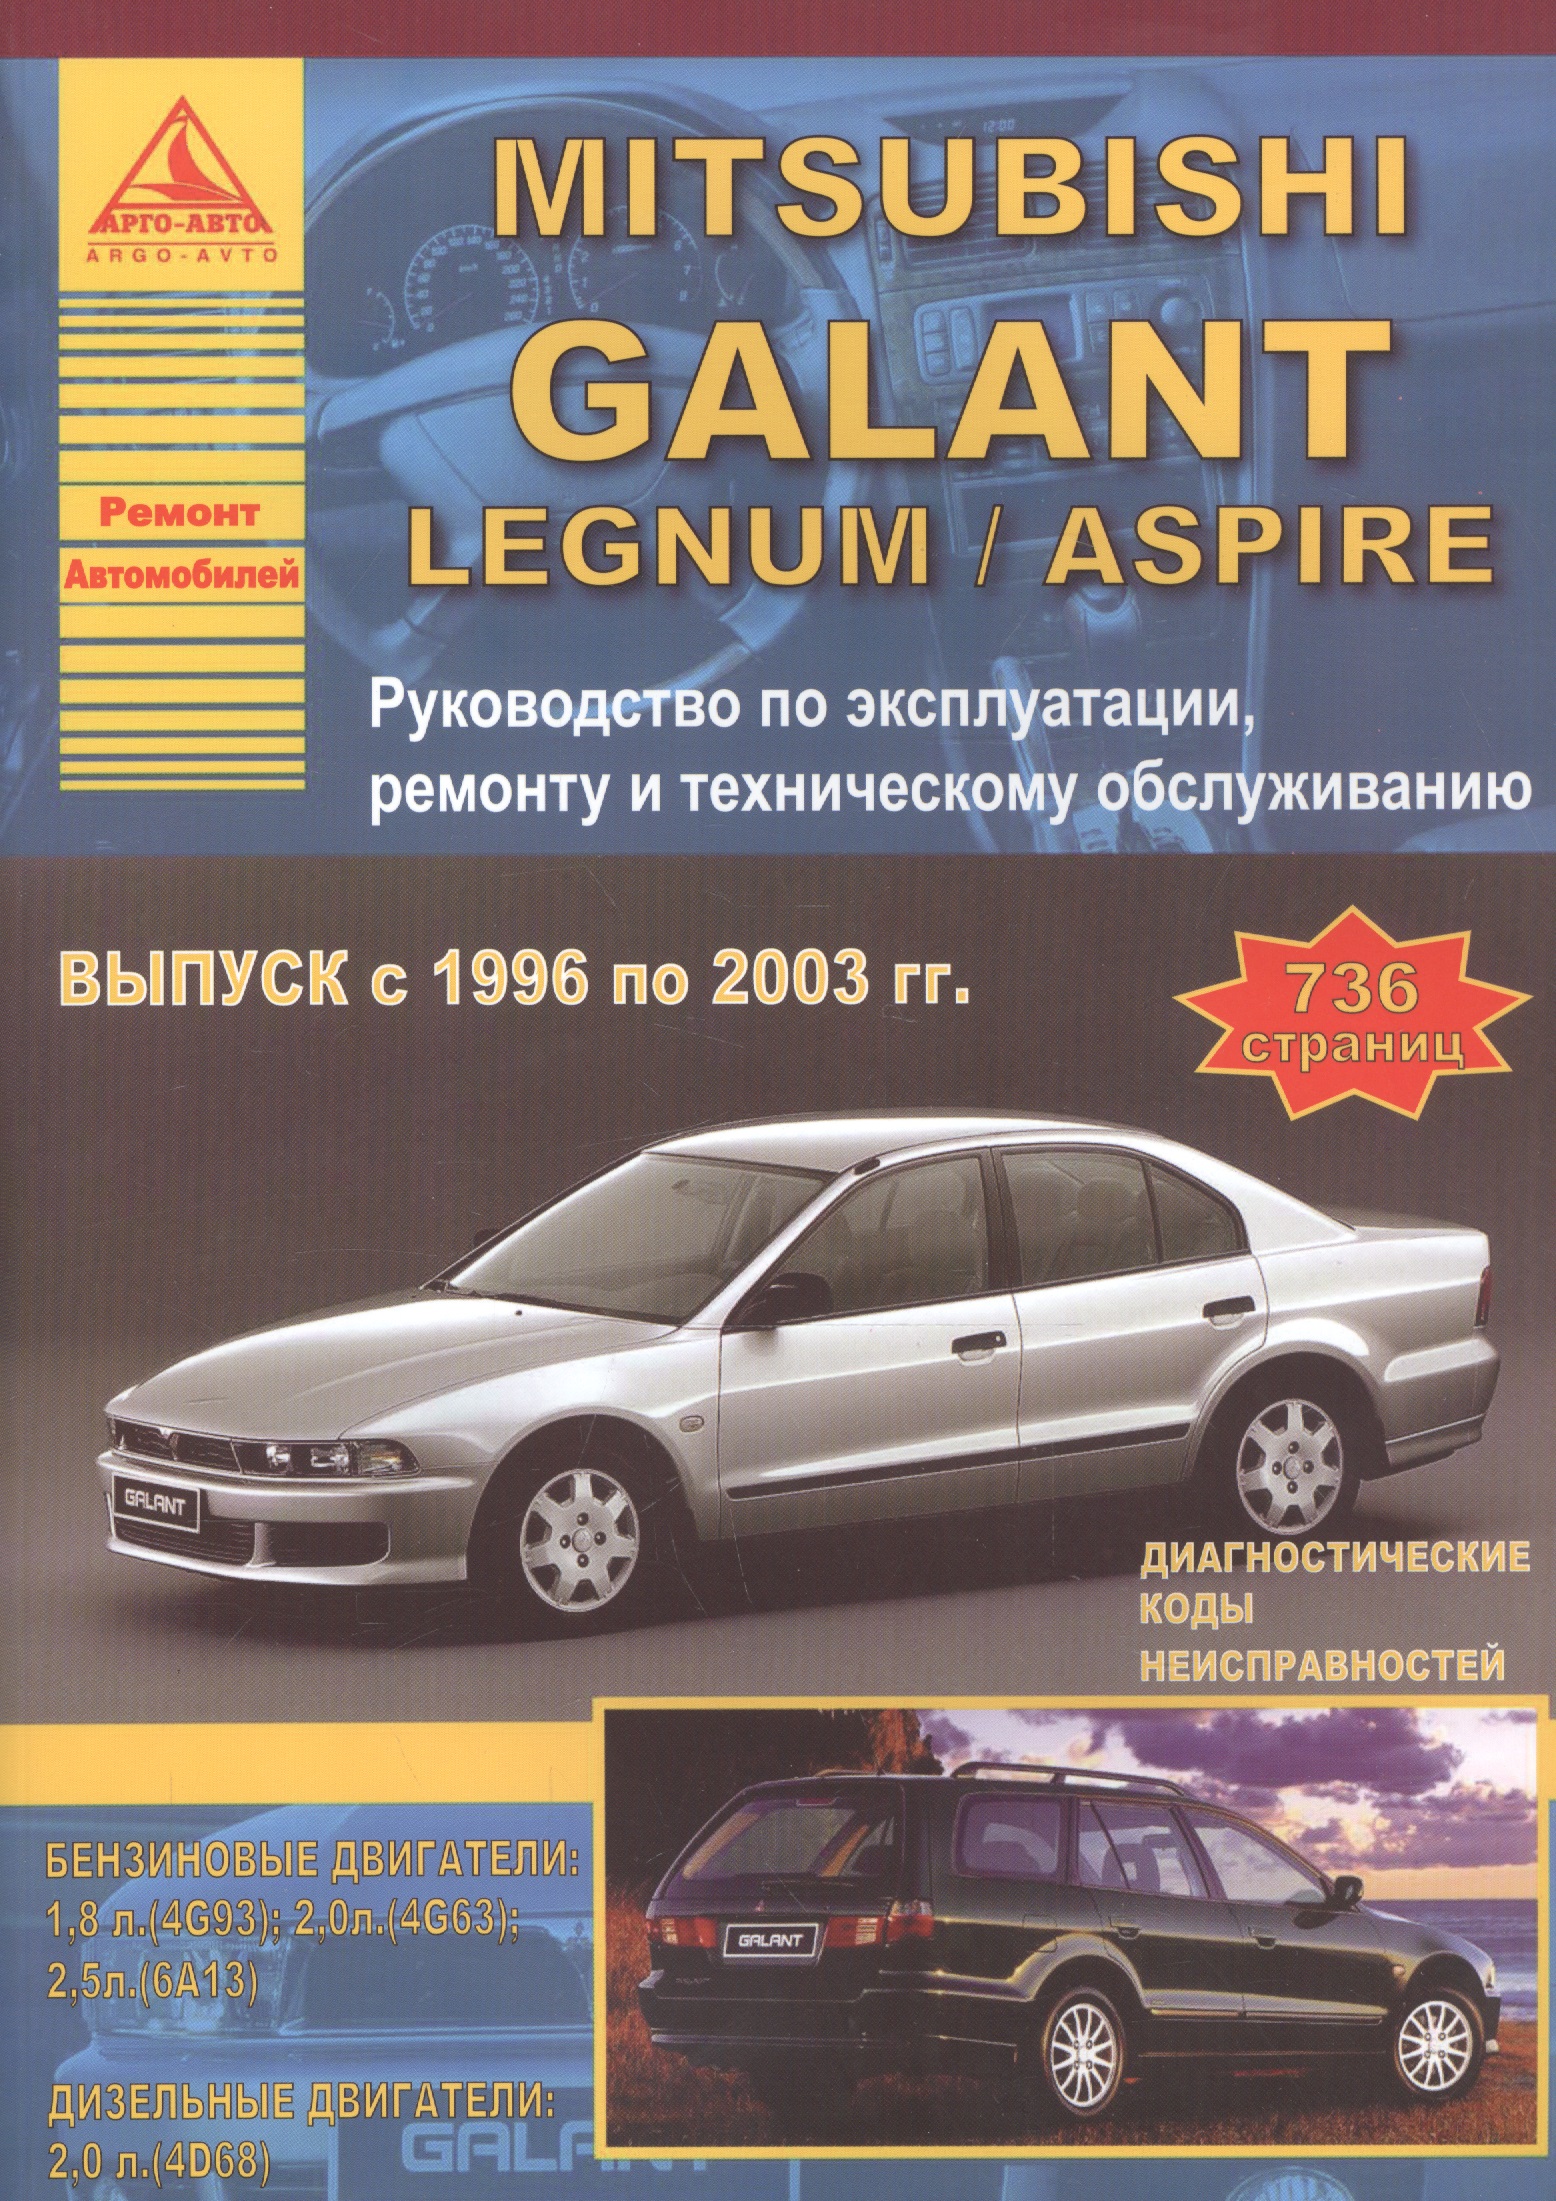 Mitsubishi Galant Legnum/Aspire mitsubishi galant legnum aspire